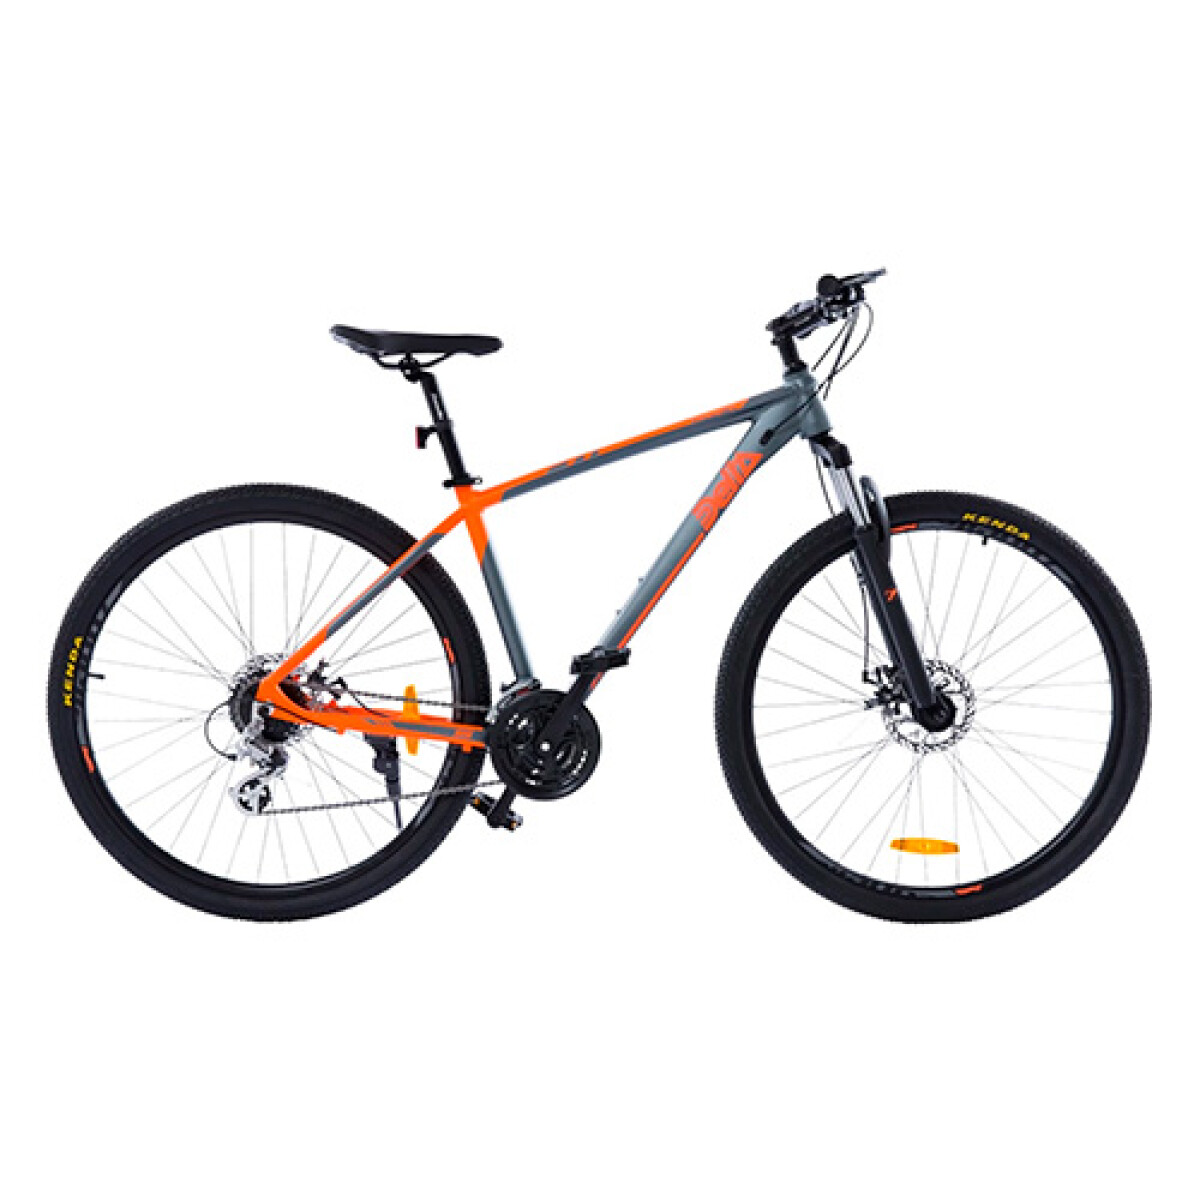 Bicicleta Zanella Delta S2.40T (M) Rod 29" Gris C/anaranjado - 001 